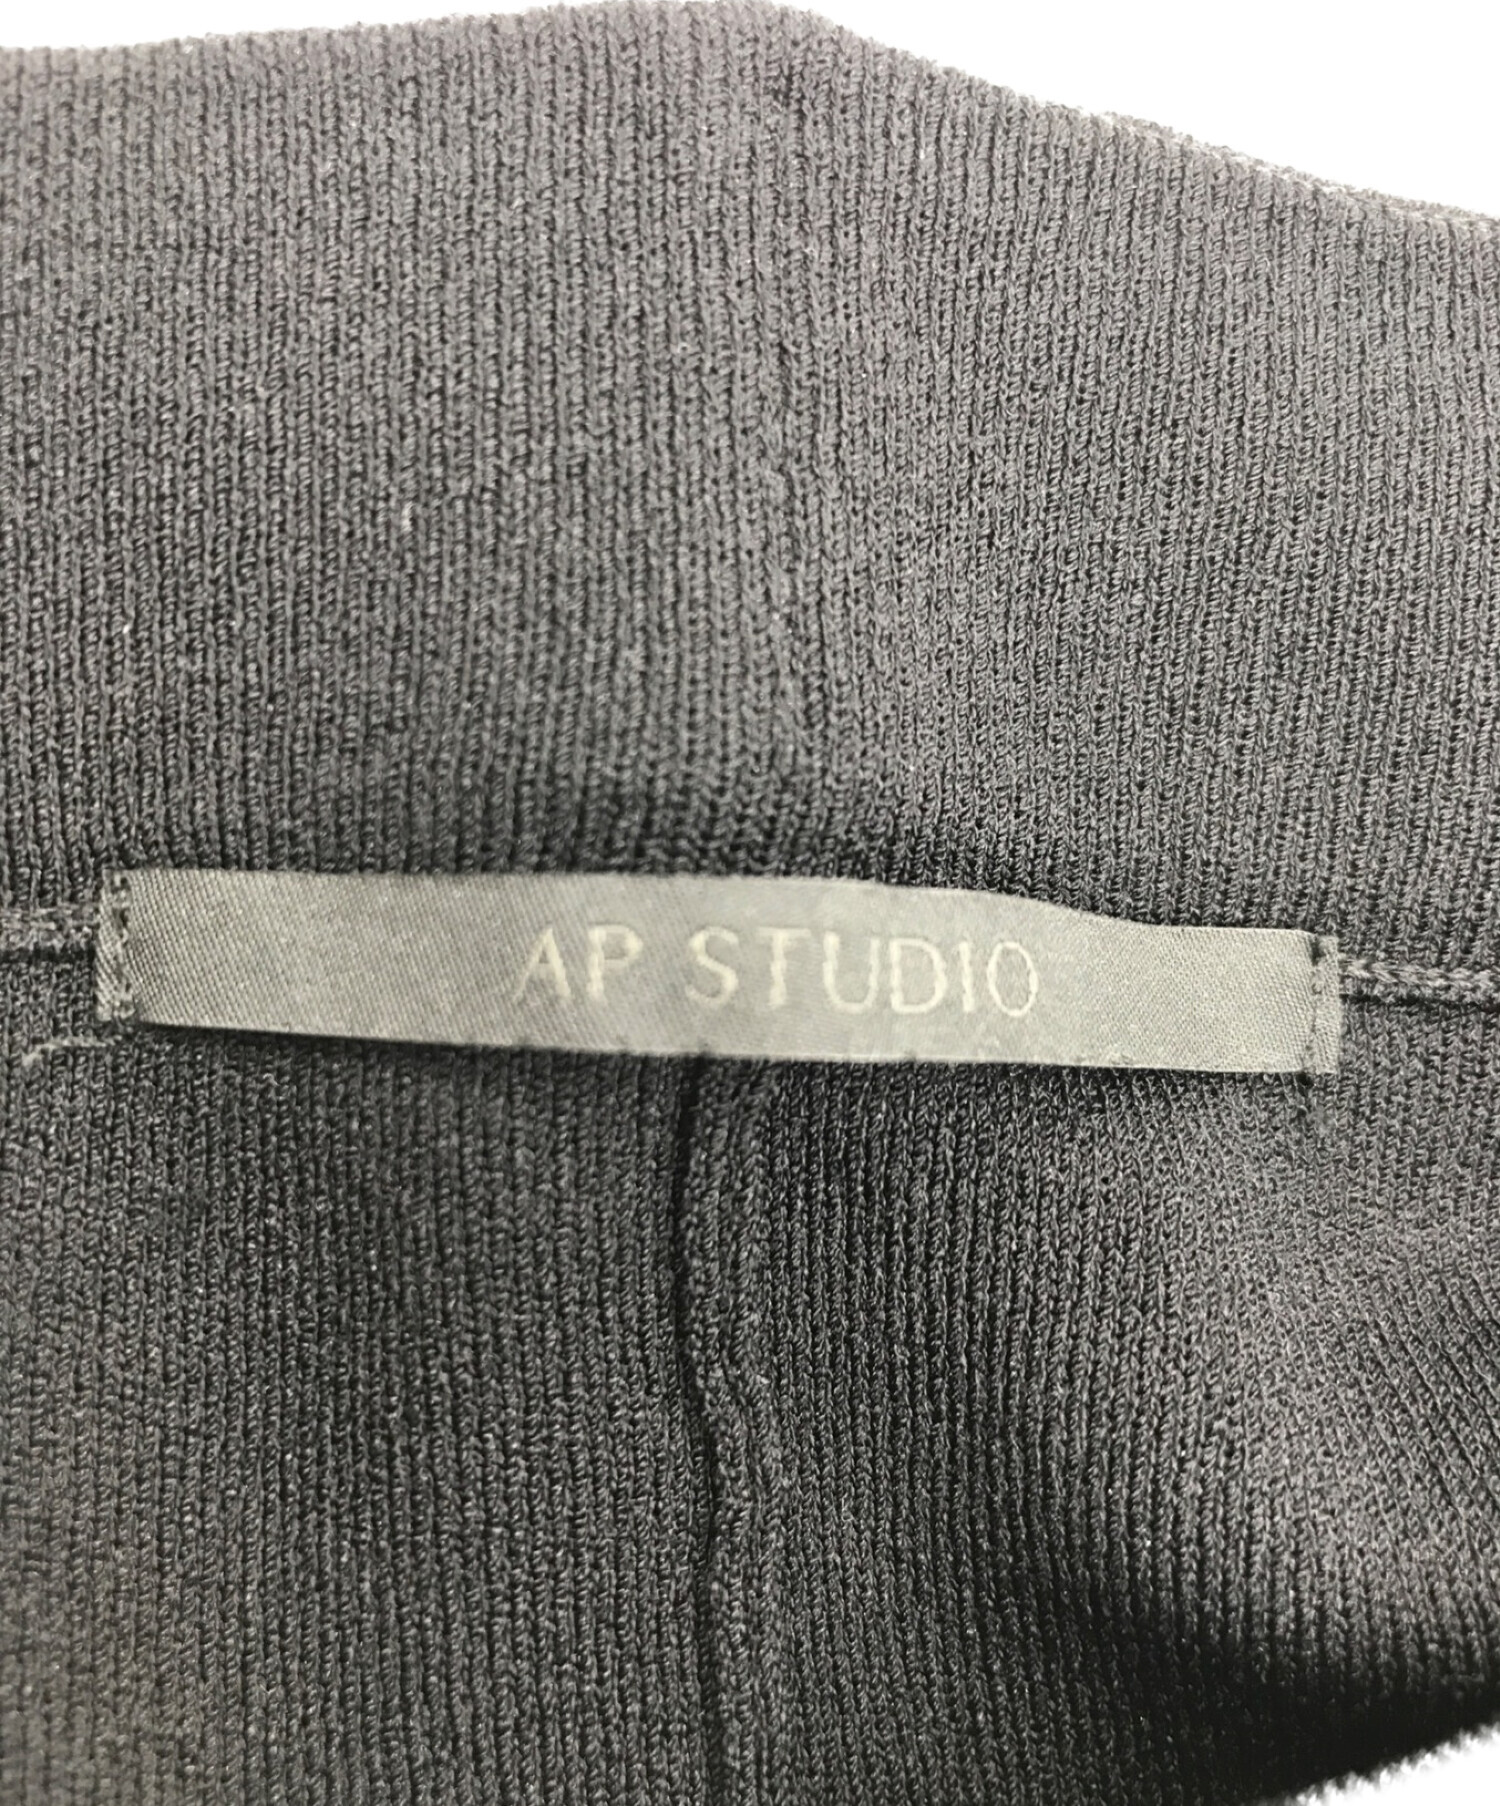 AP STUDIO (エーピーストゥディオ) スムースタイトスカート ブラック サイズ:38